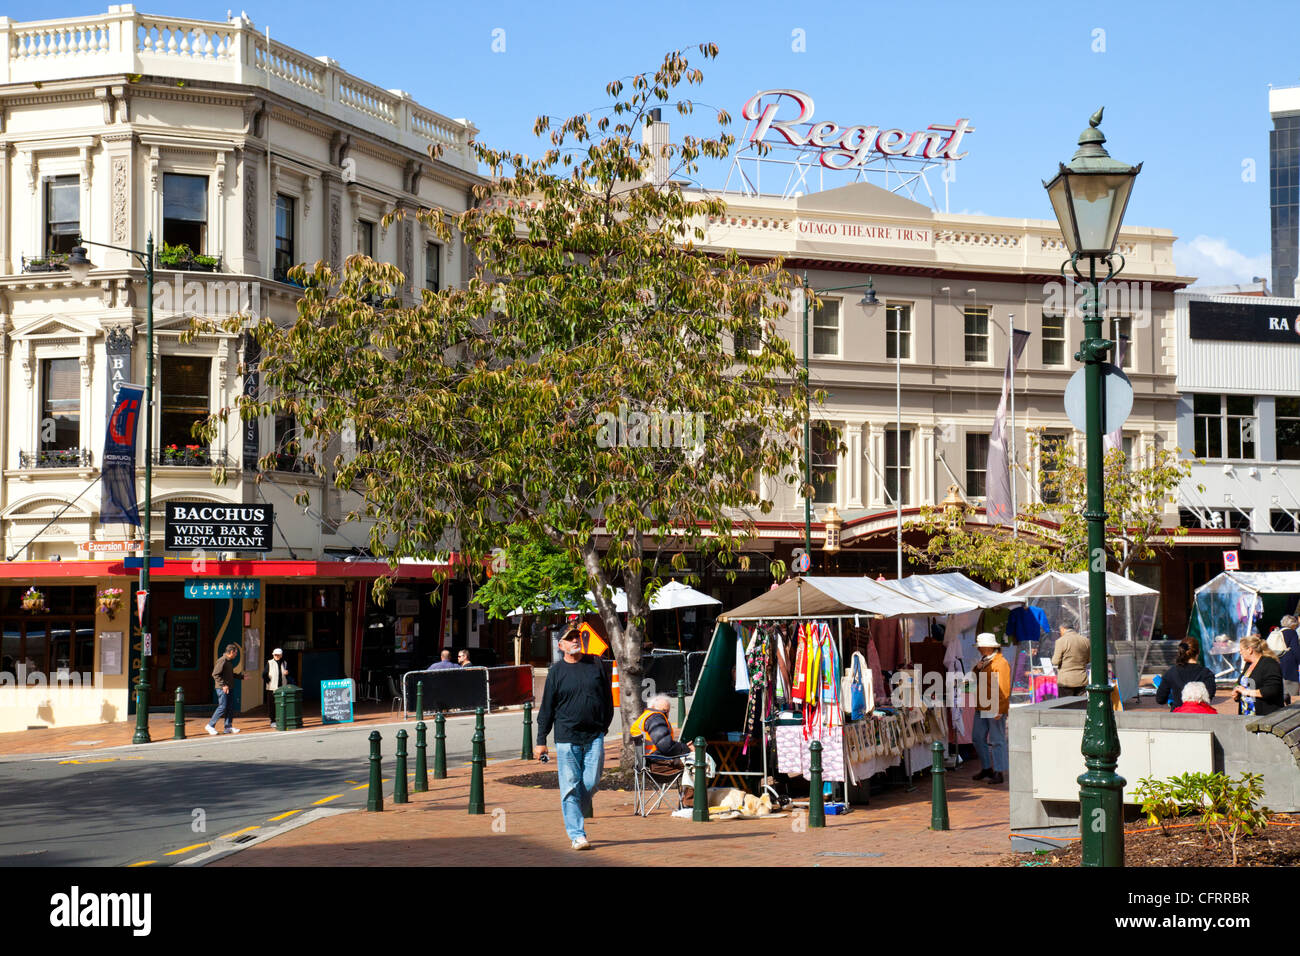 A street scene in Dunedin, Otago, New Zealand. Stock Photo